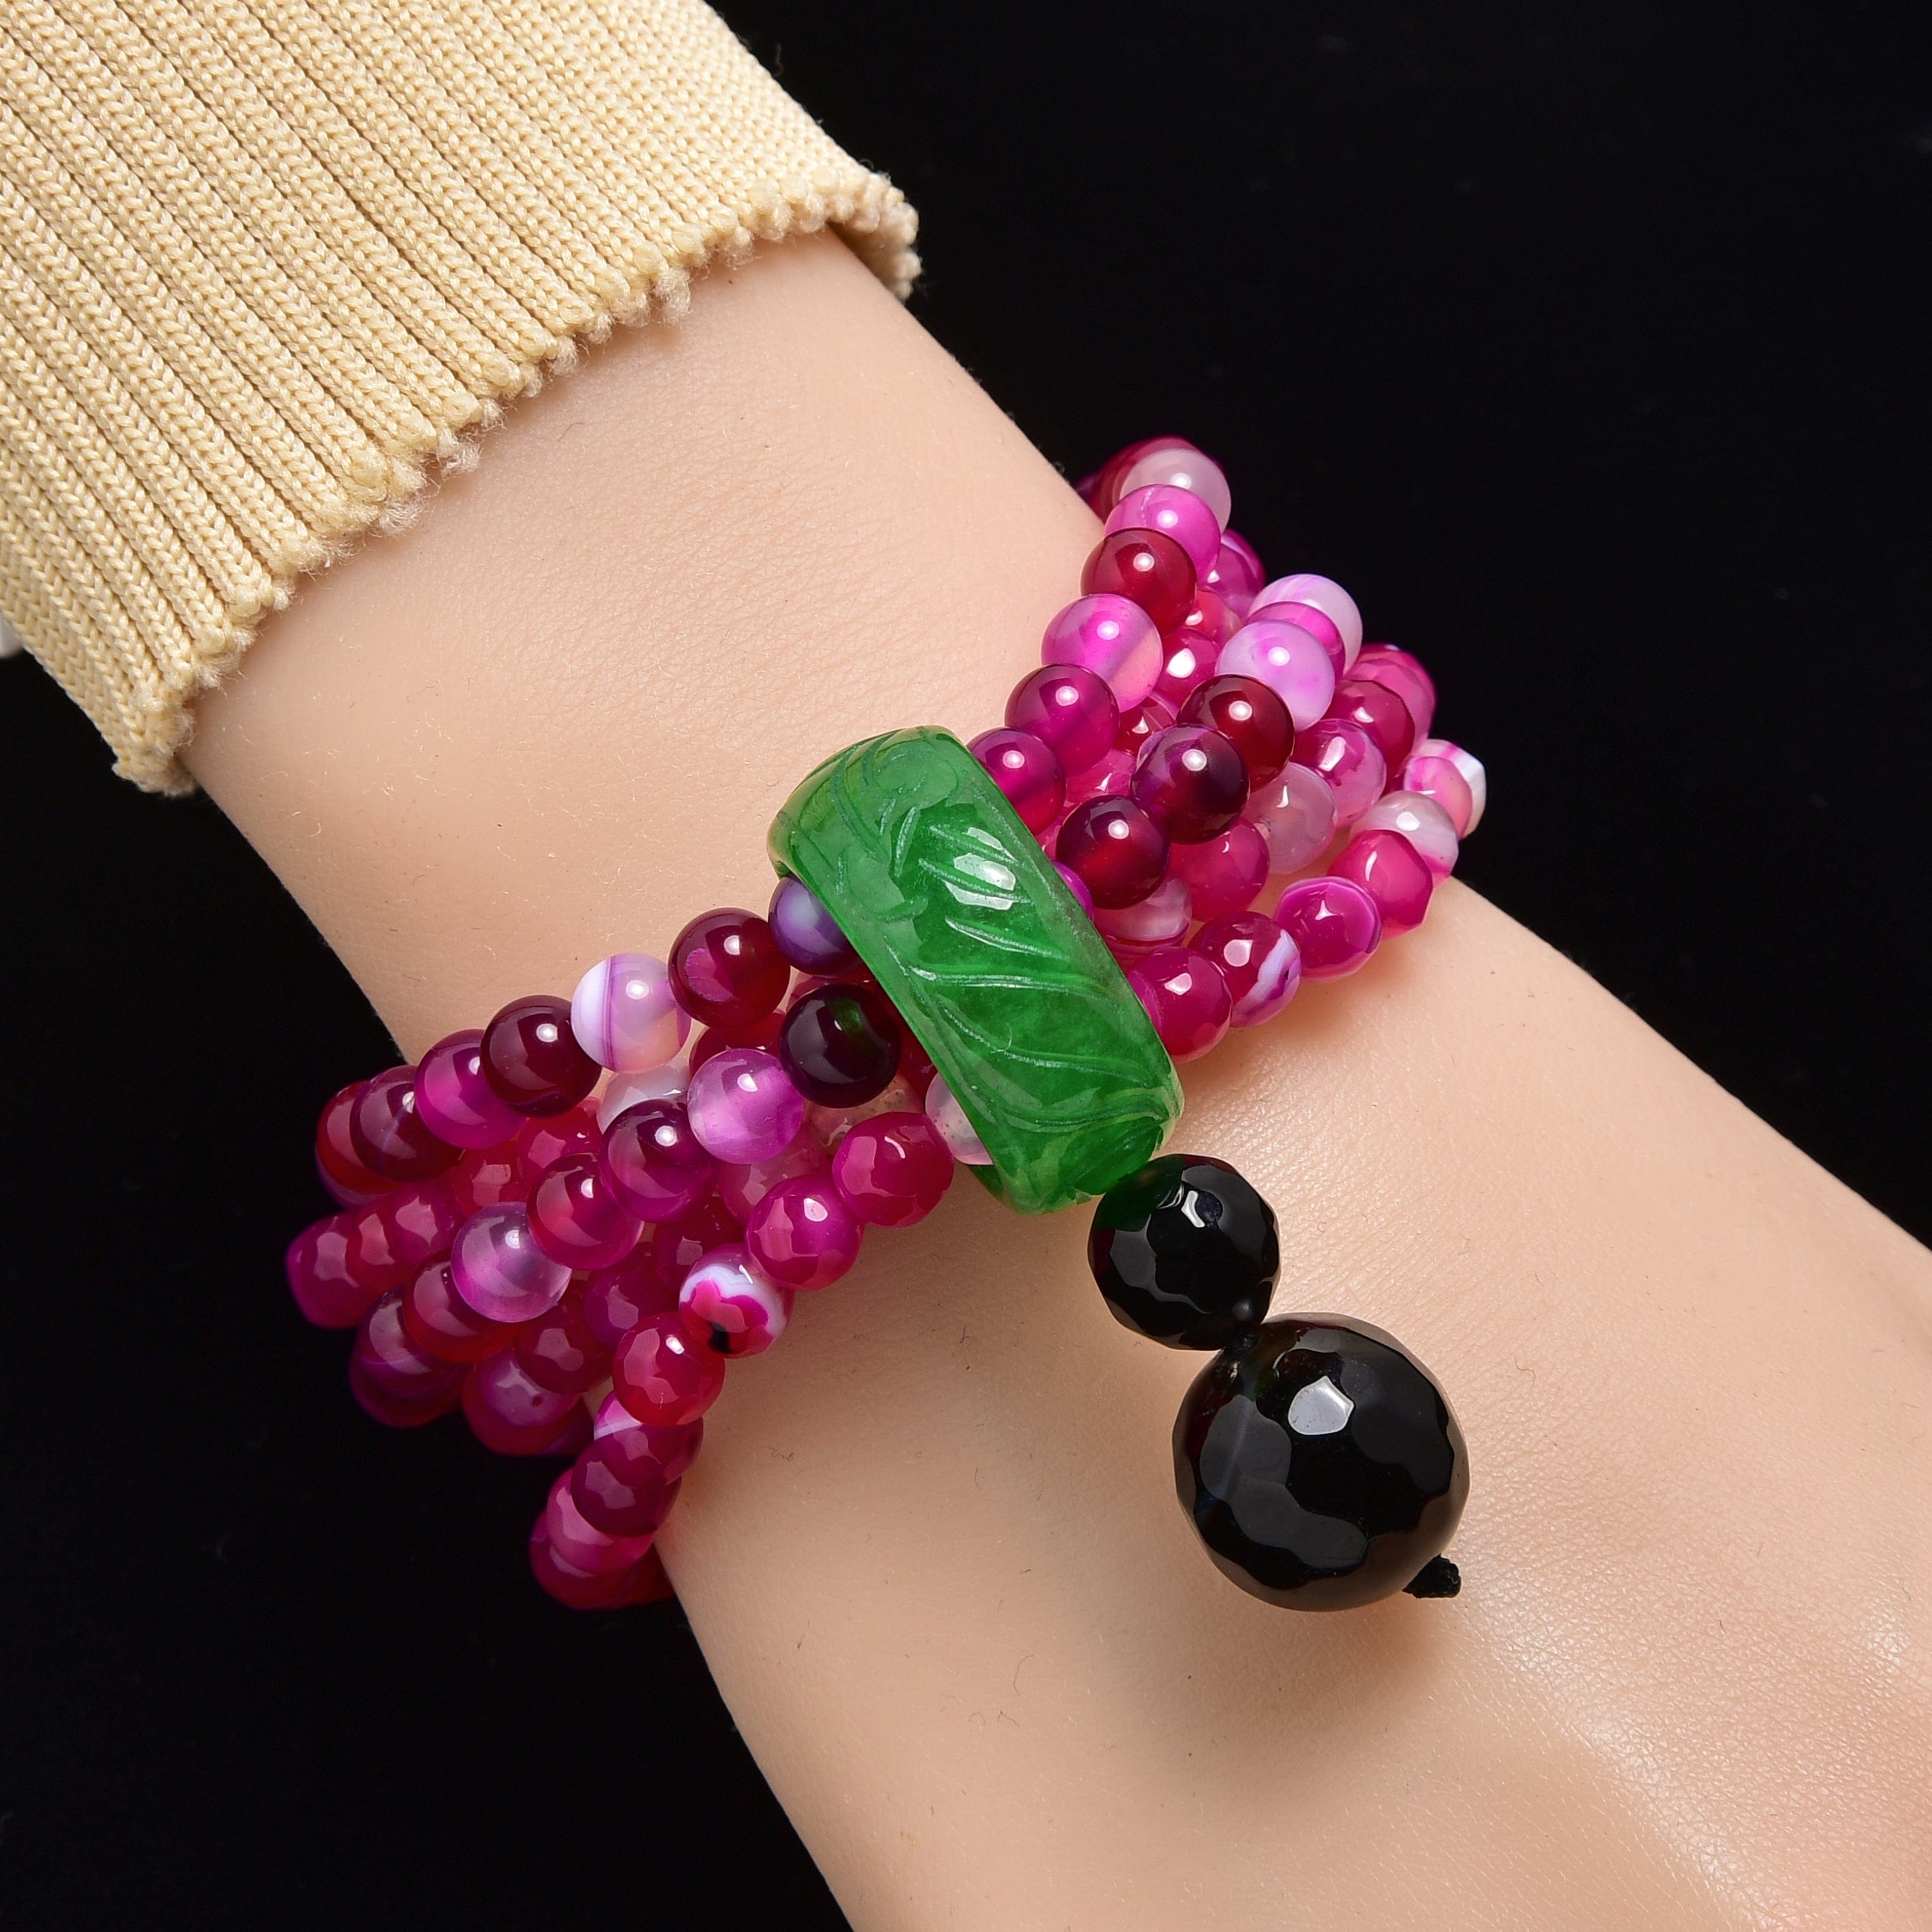 Kalifano Gemstone Bracelets Pink Agate 6mm Beads with Jade Ring Gemstone Elastic Bracelet PLAT-BGP-JRPK